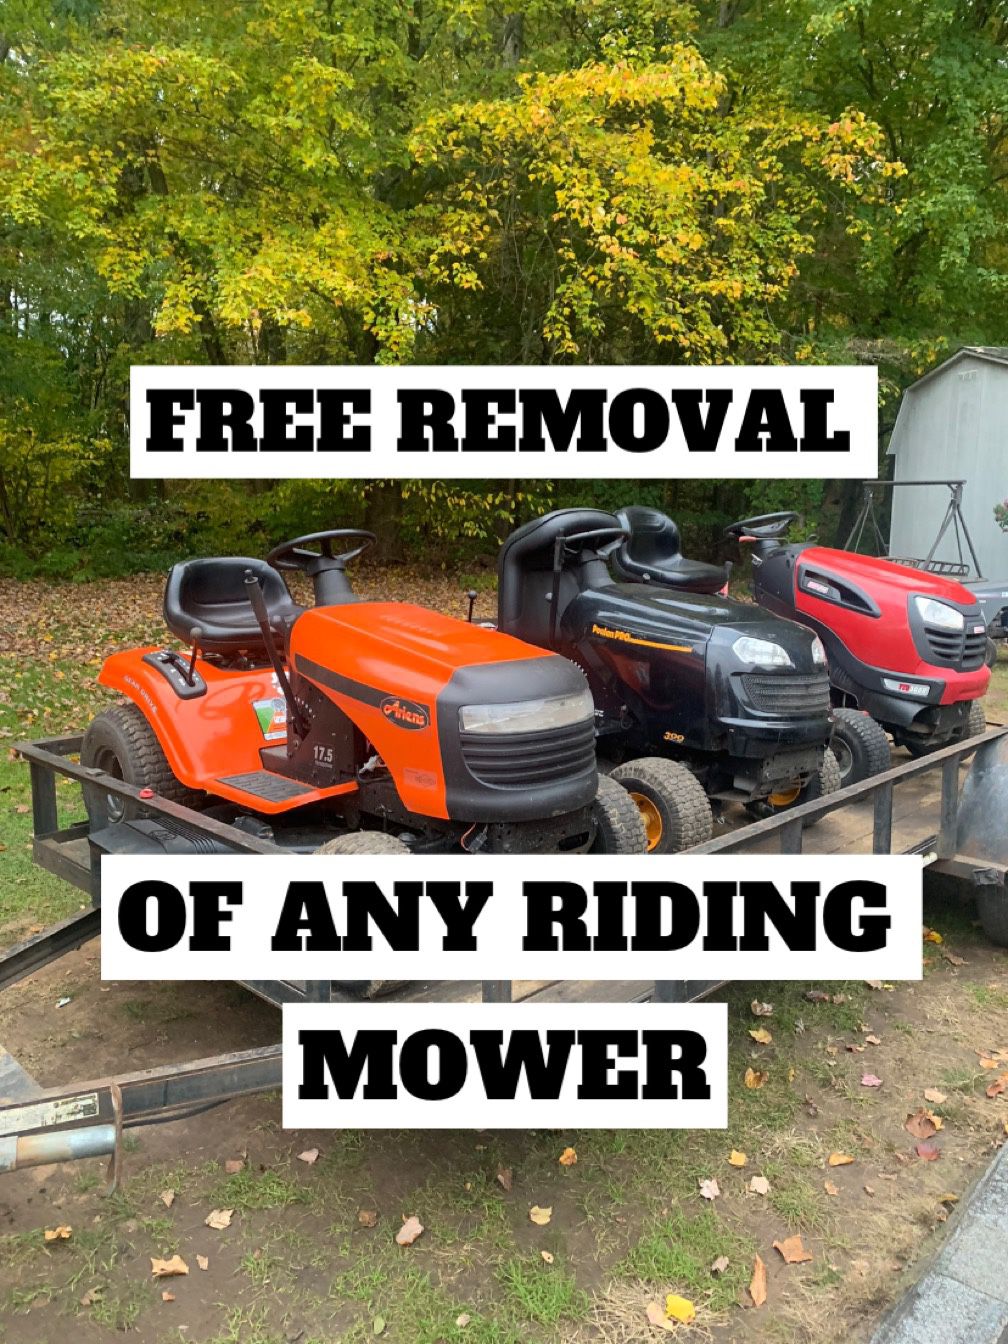 Ridingmower / Tractor Removal